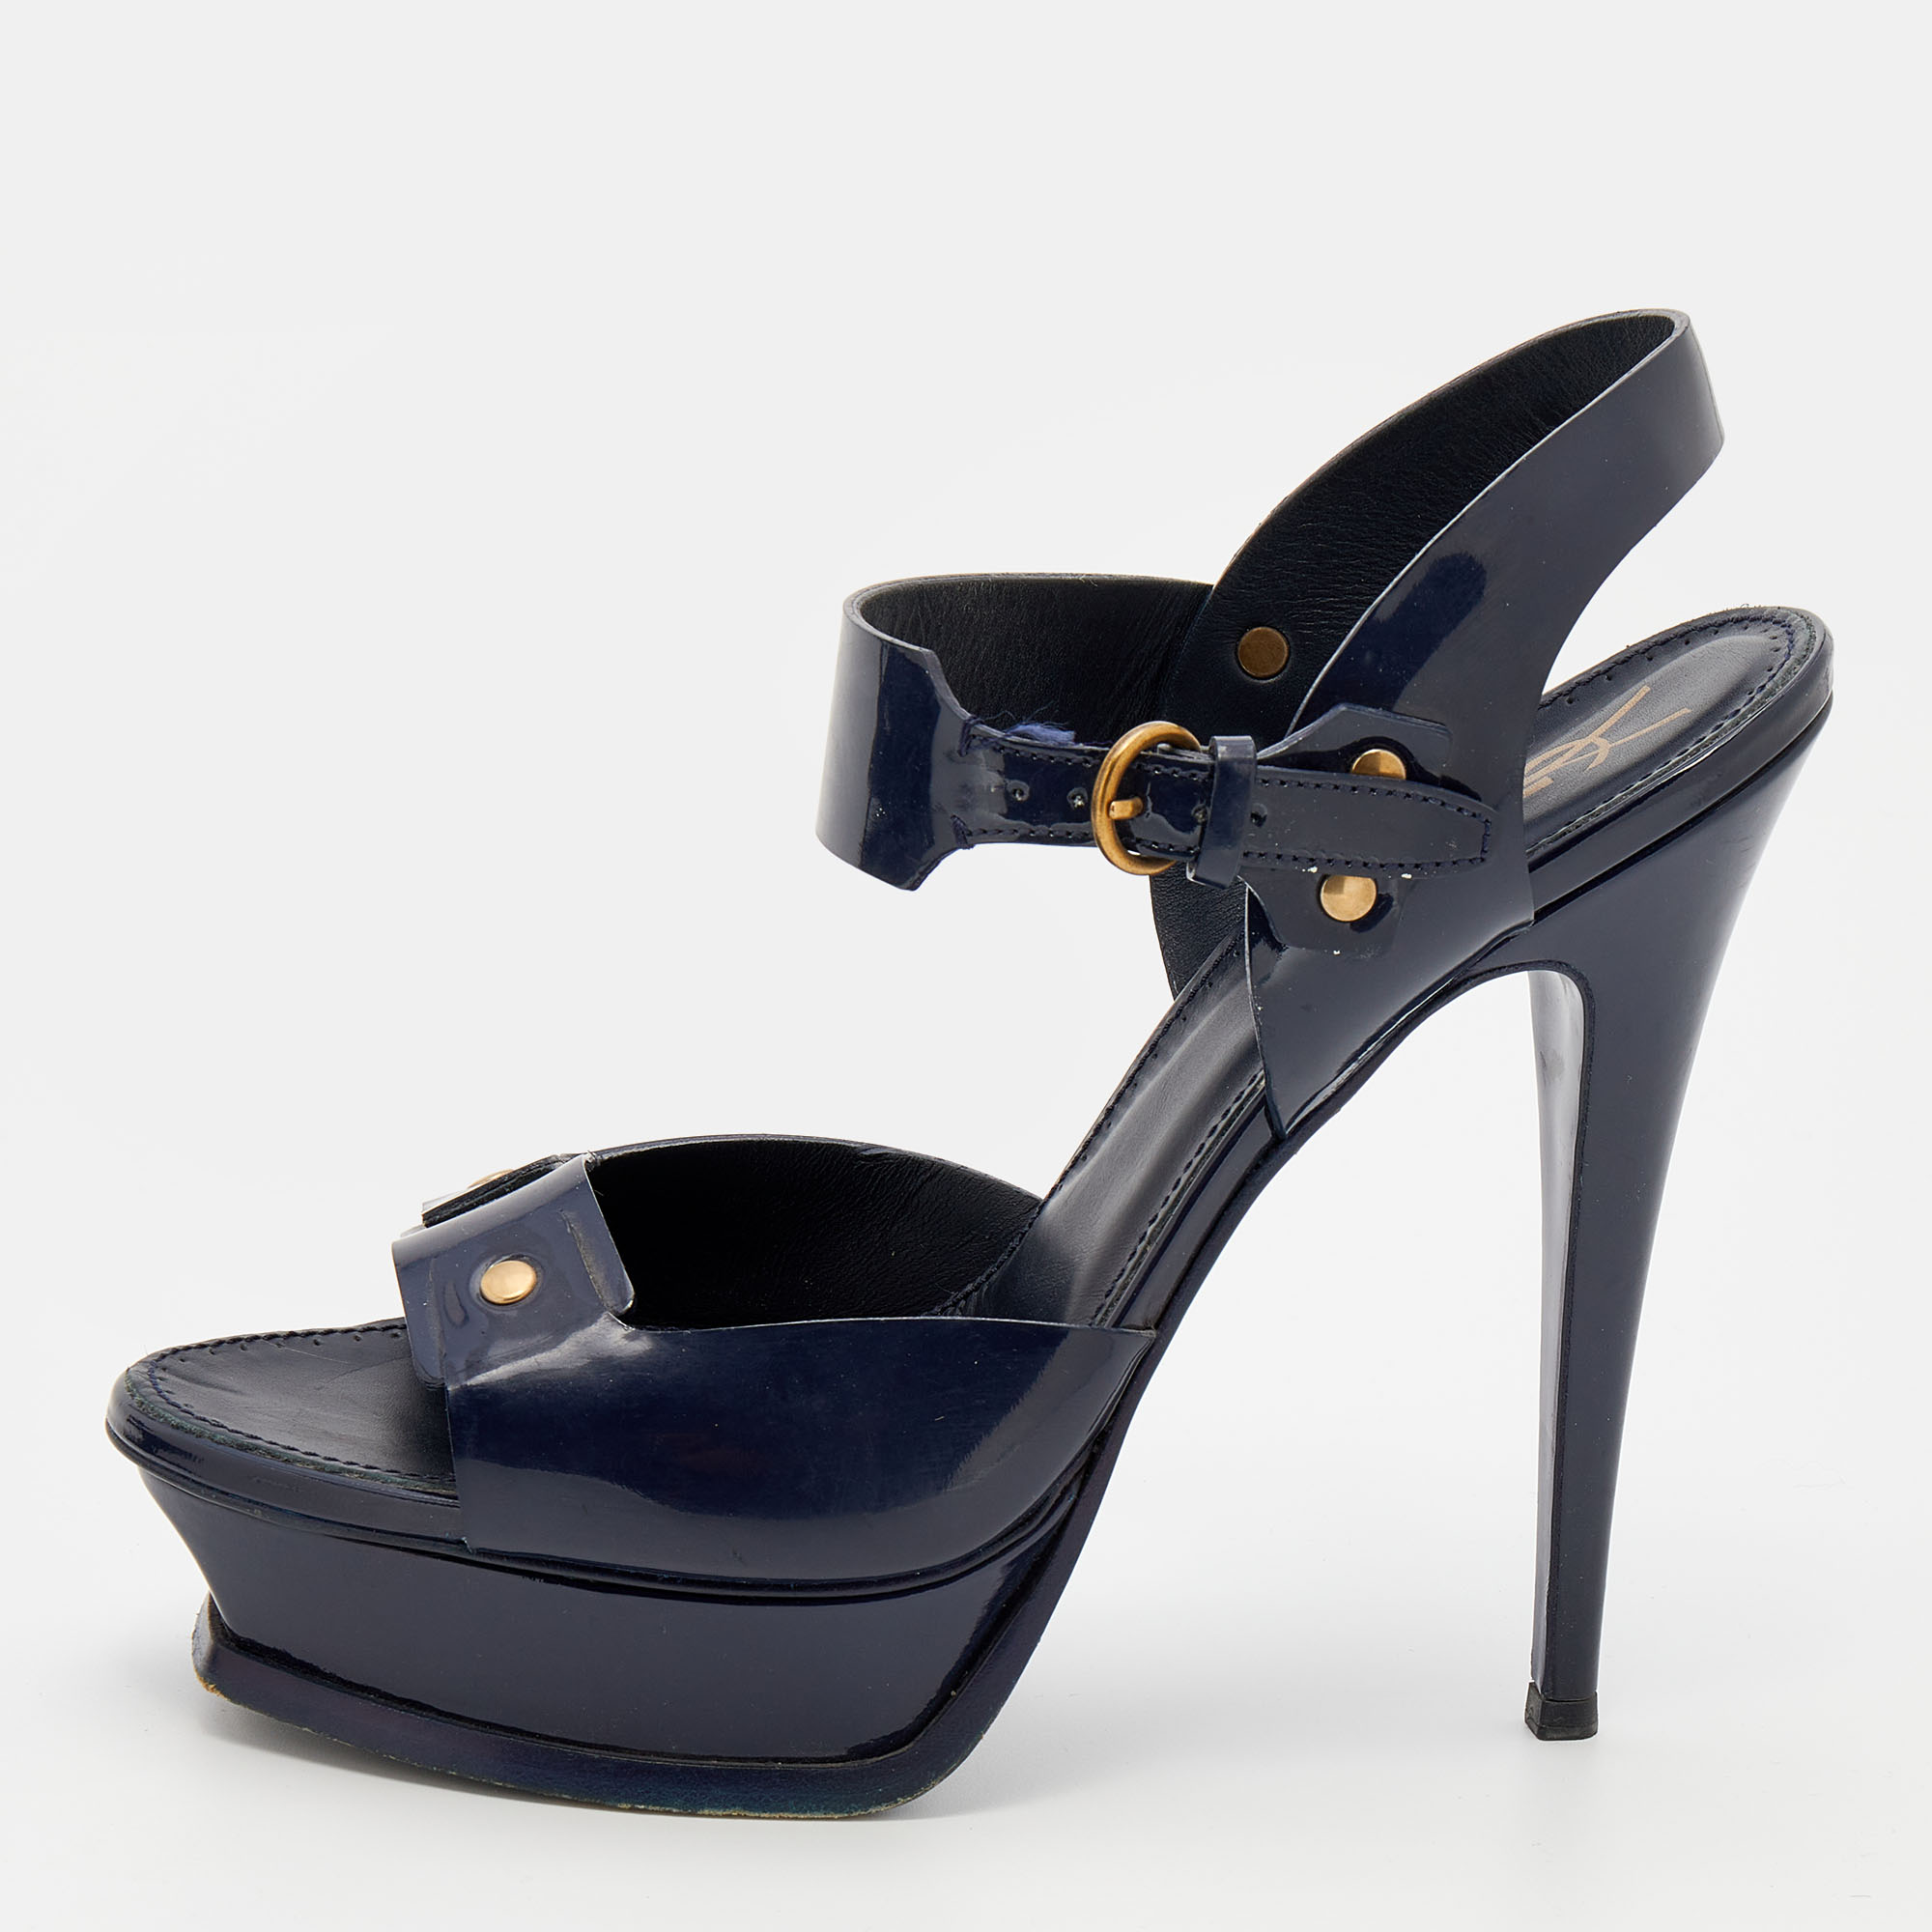 Yves saint laurent navy blue patent leather studded ankle strap platform sandals size 40